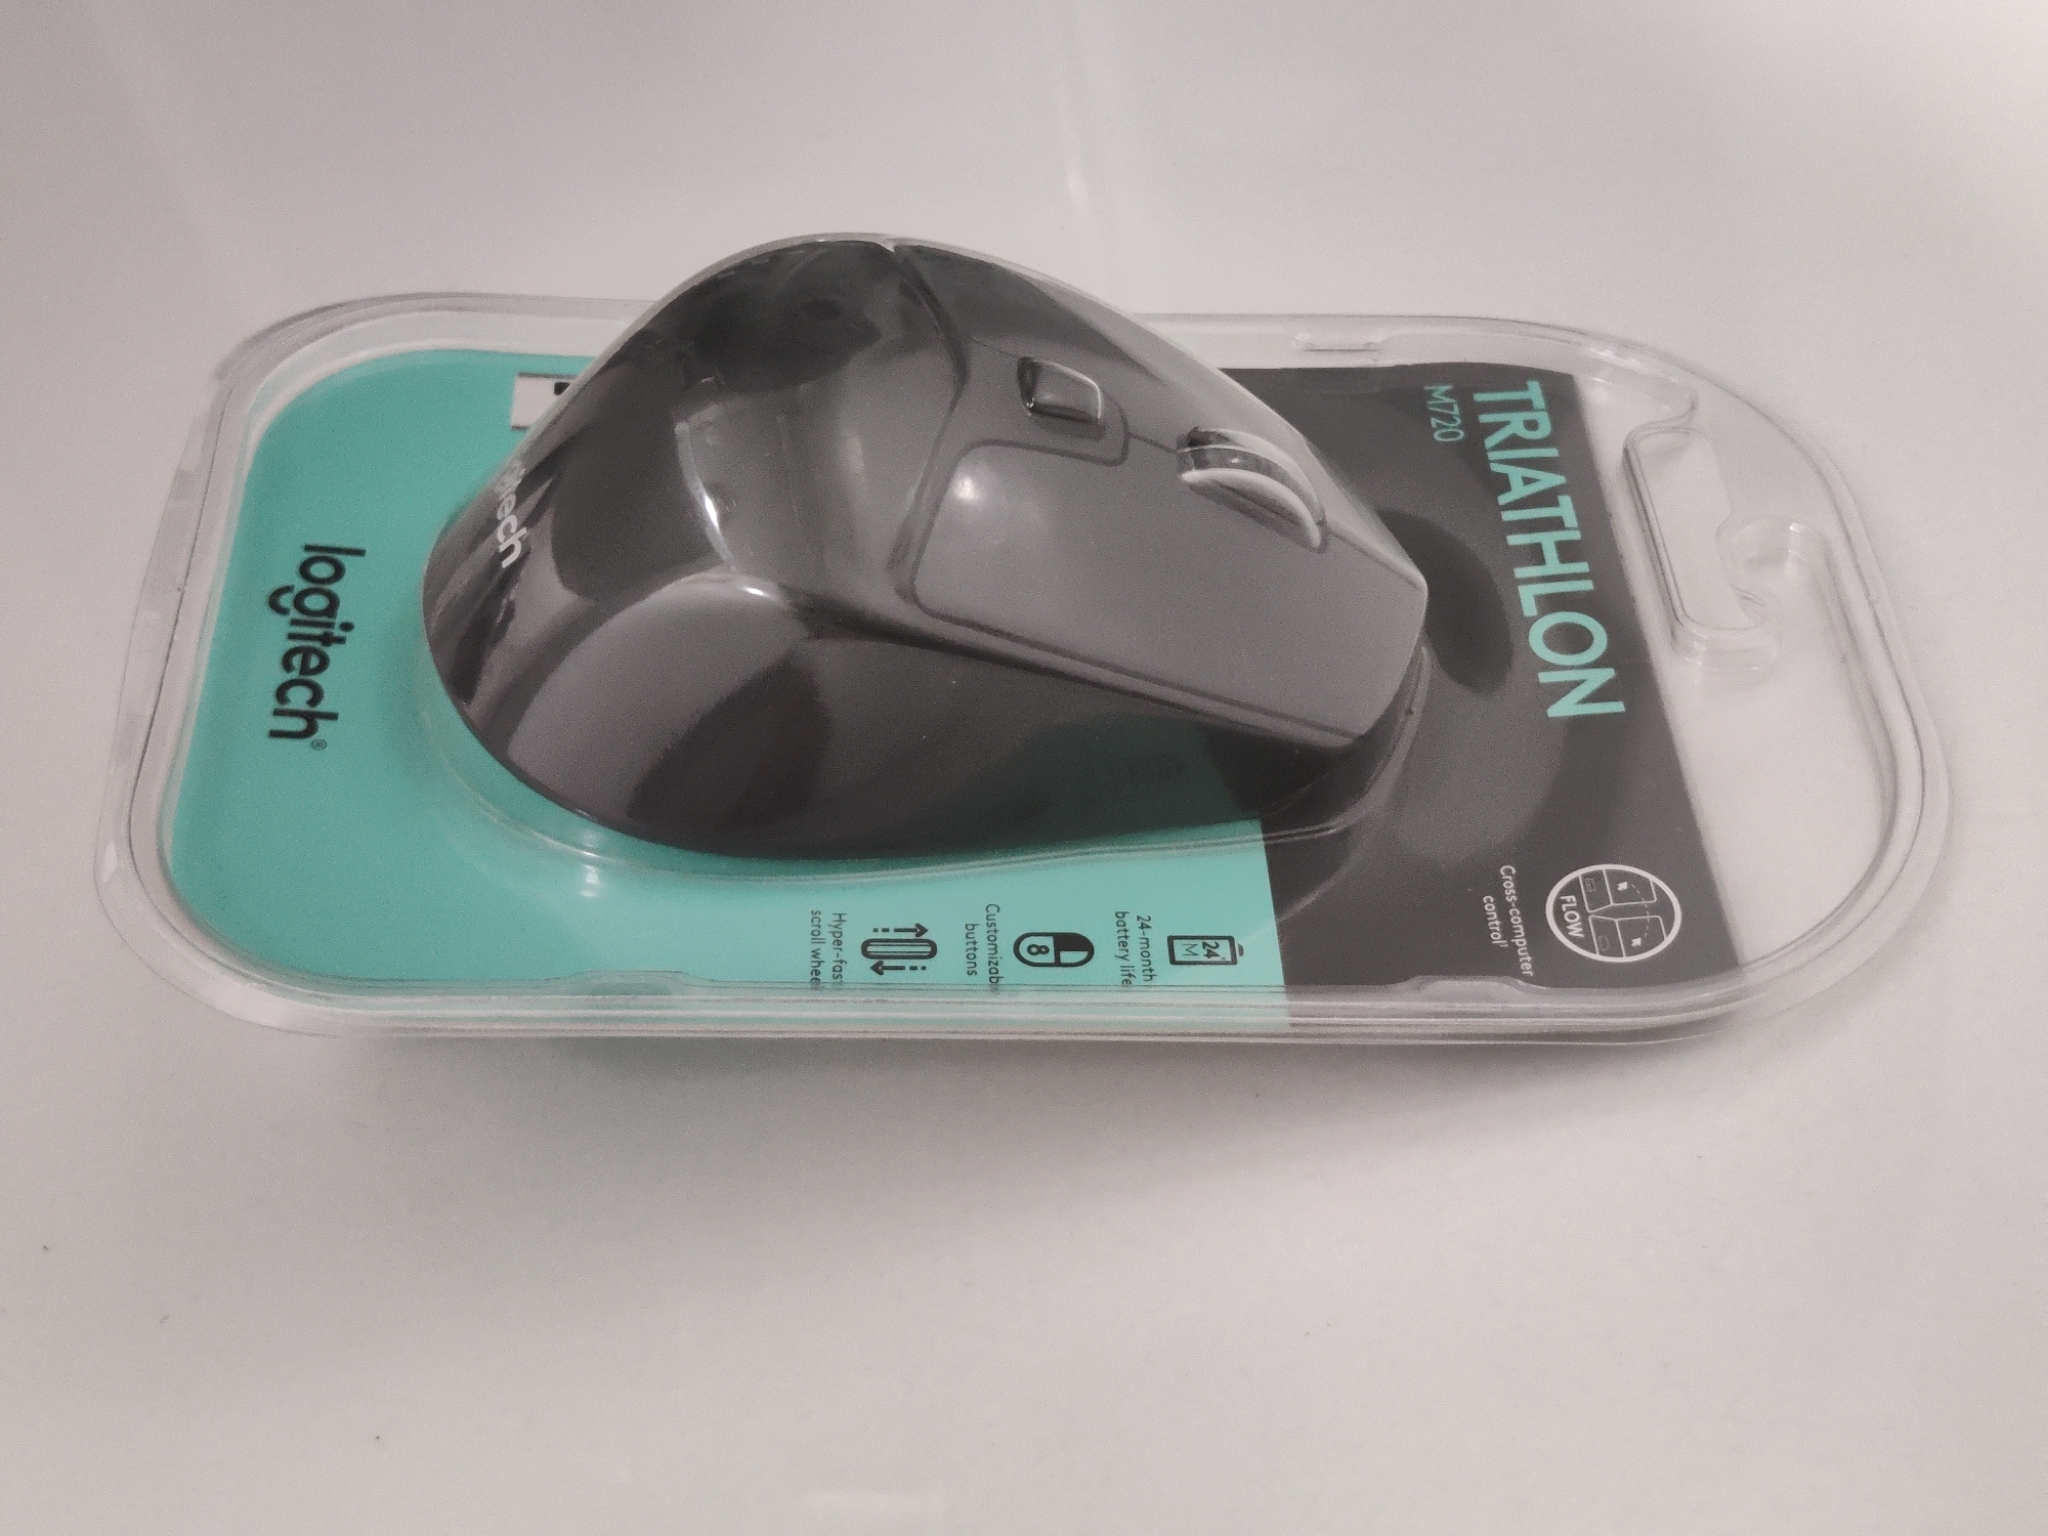  Logitech M720 Triathlon Multi-Device Wireless Mouse